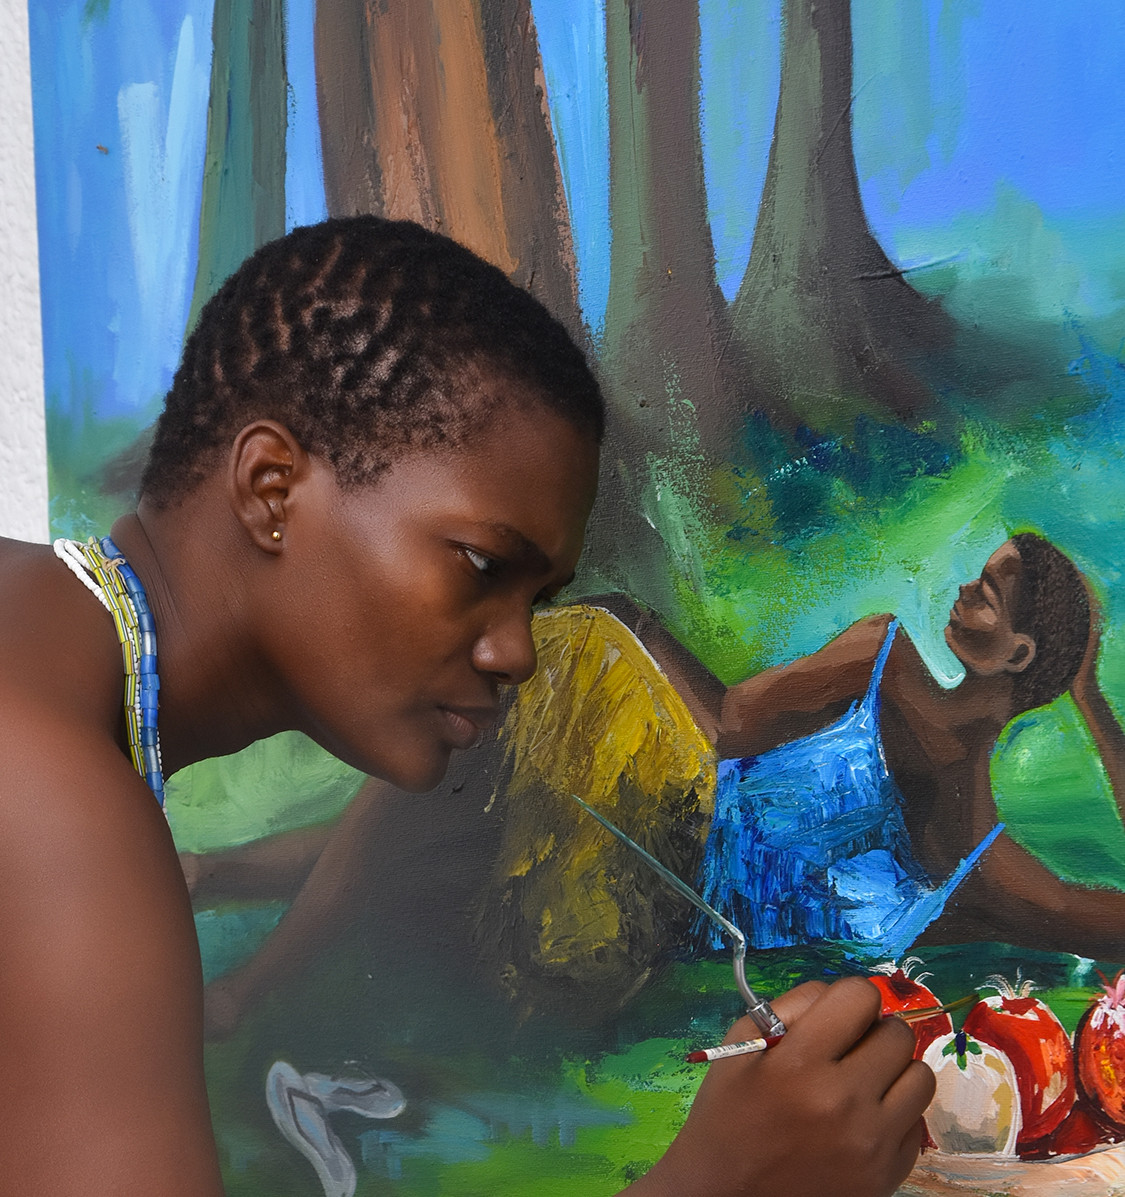 Astounding Ghanaian Painter/Musician "Nyornuwofia Agorsor" shares some stunning photos from her art studio Afro News Wire